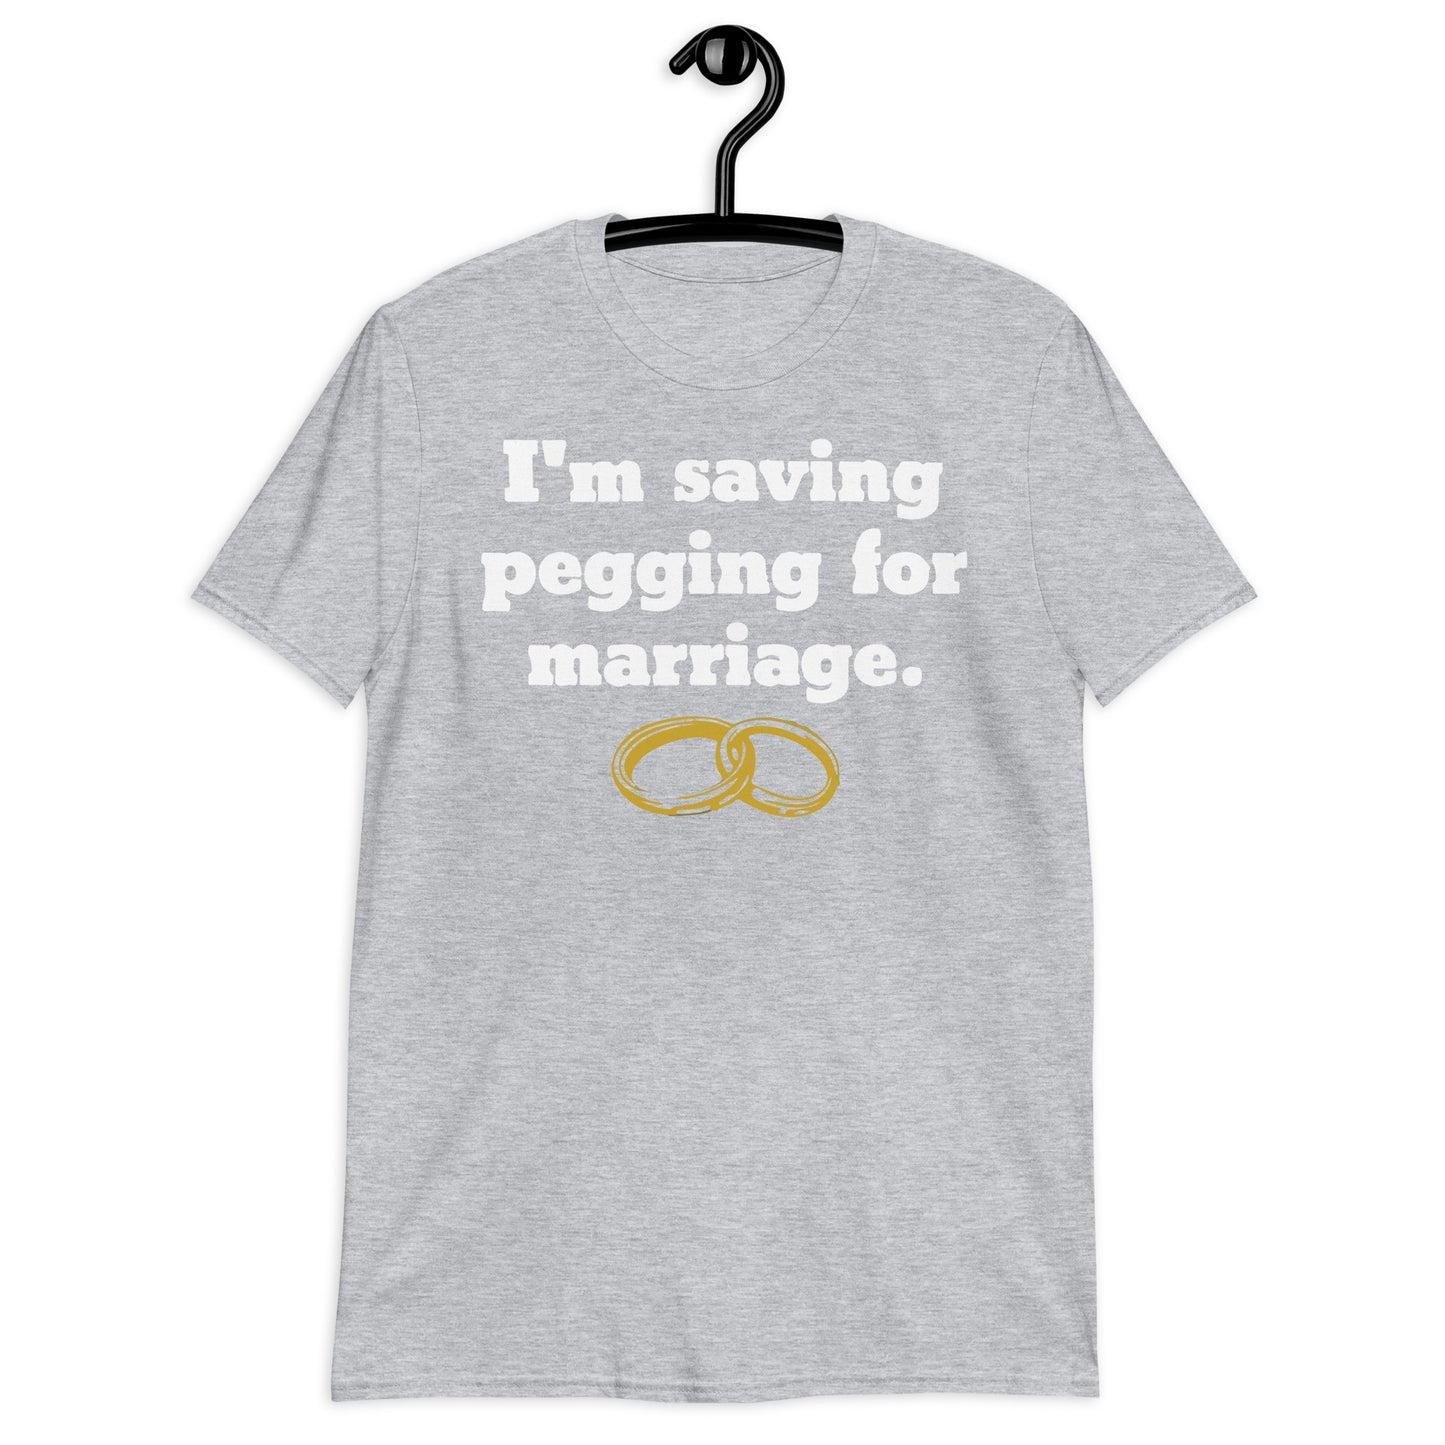 I'm Saving Pegging For Marriage Short-Sleeve Unisex T-Shirt